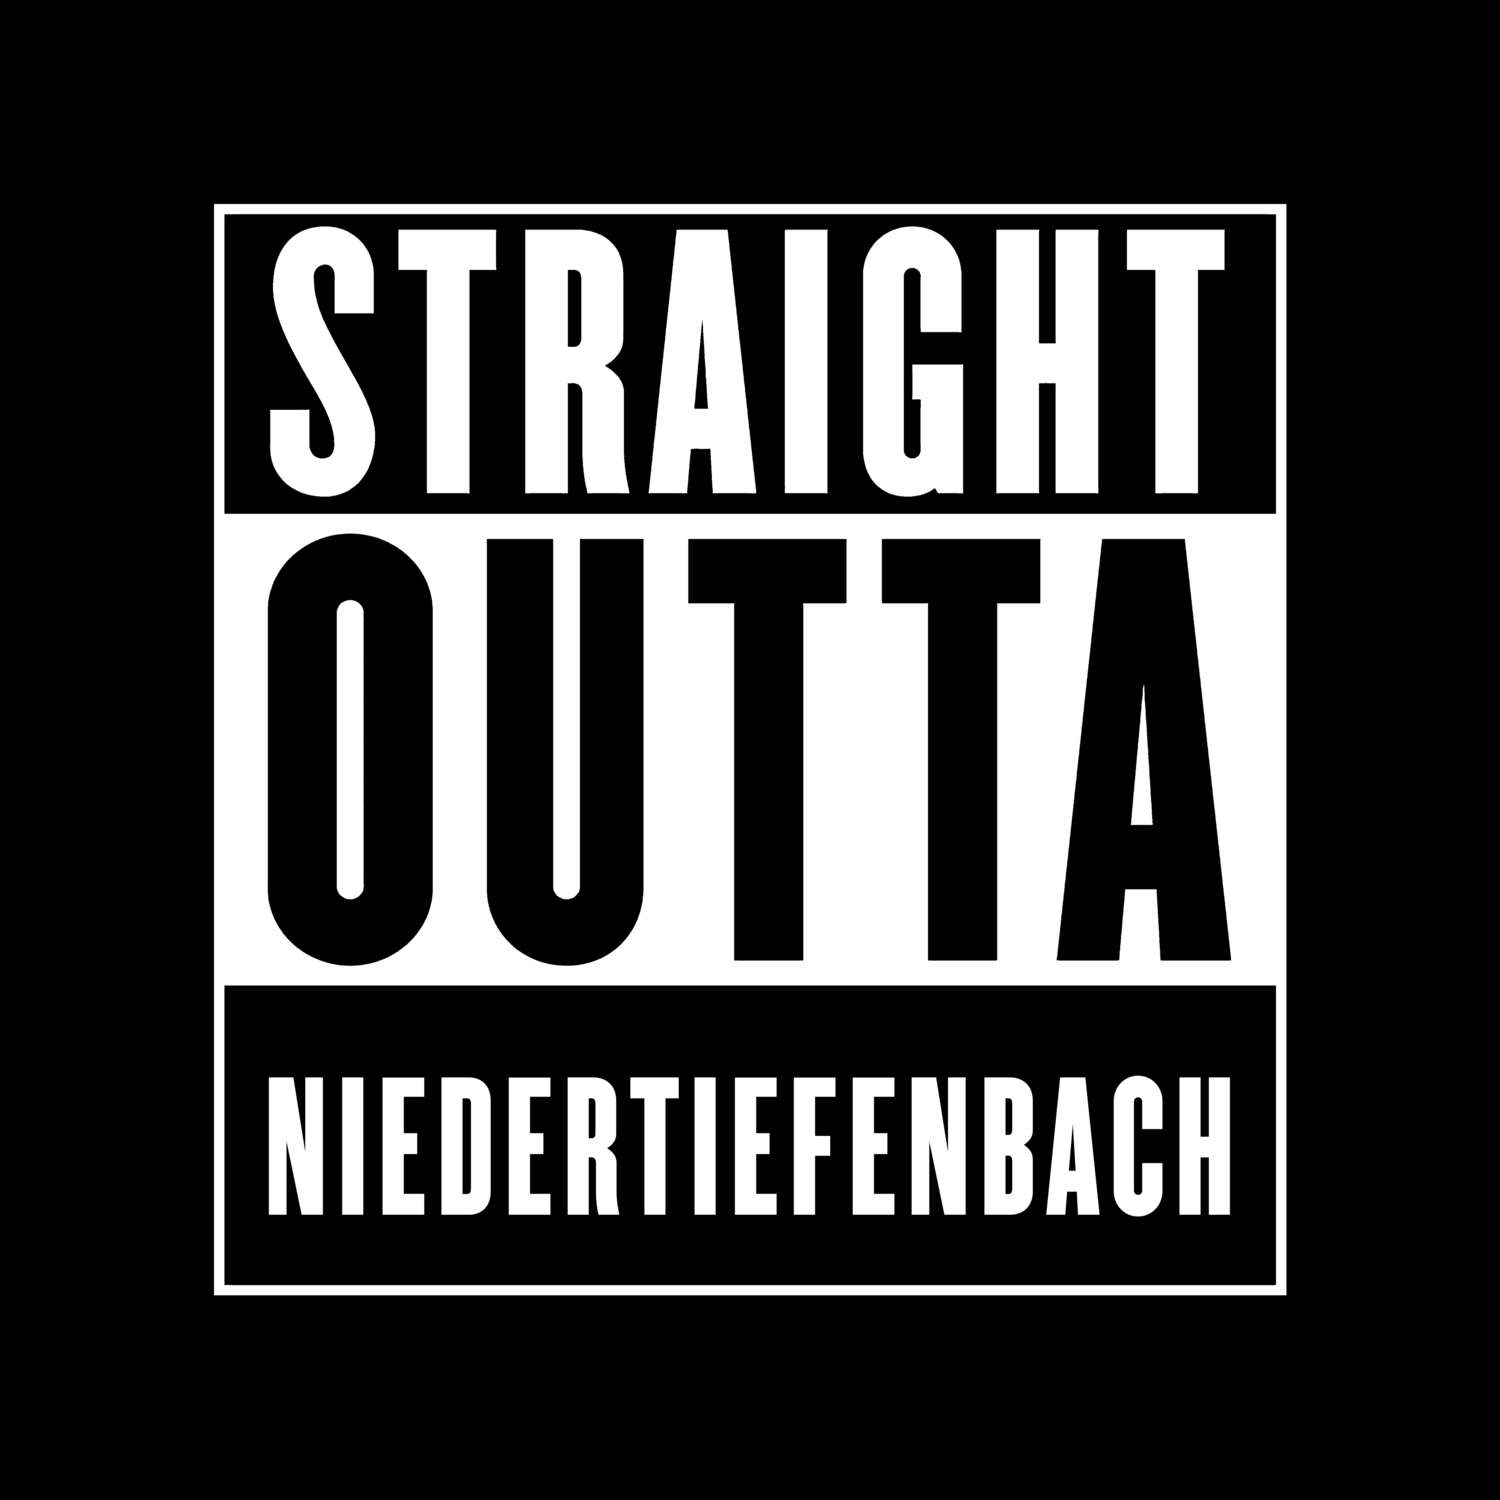 Niedertiefenbach T-Shirt »Straight Outta«